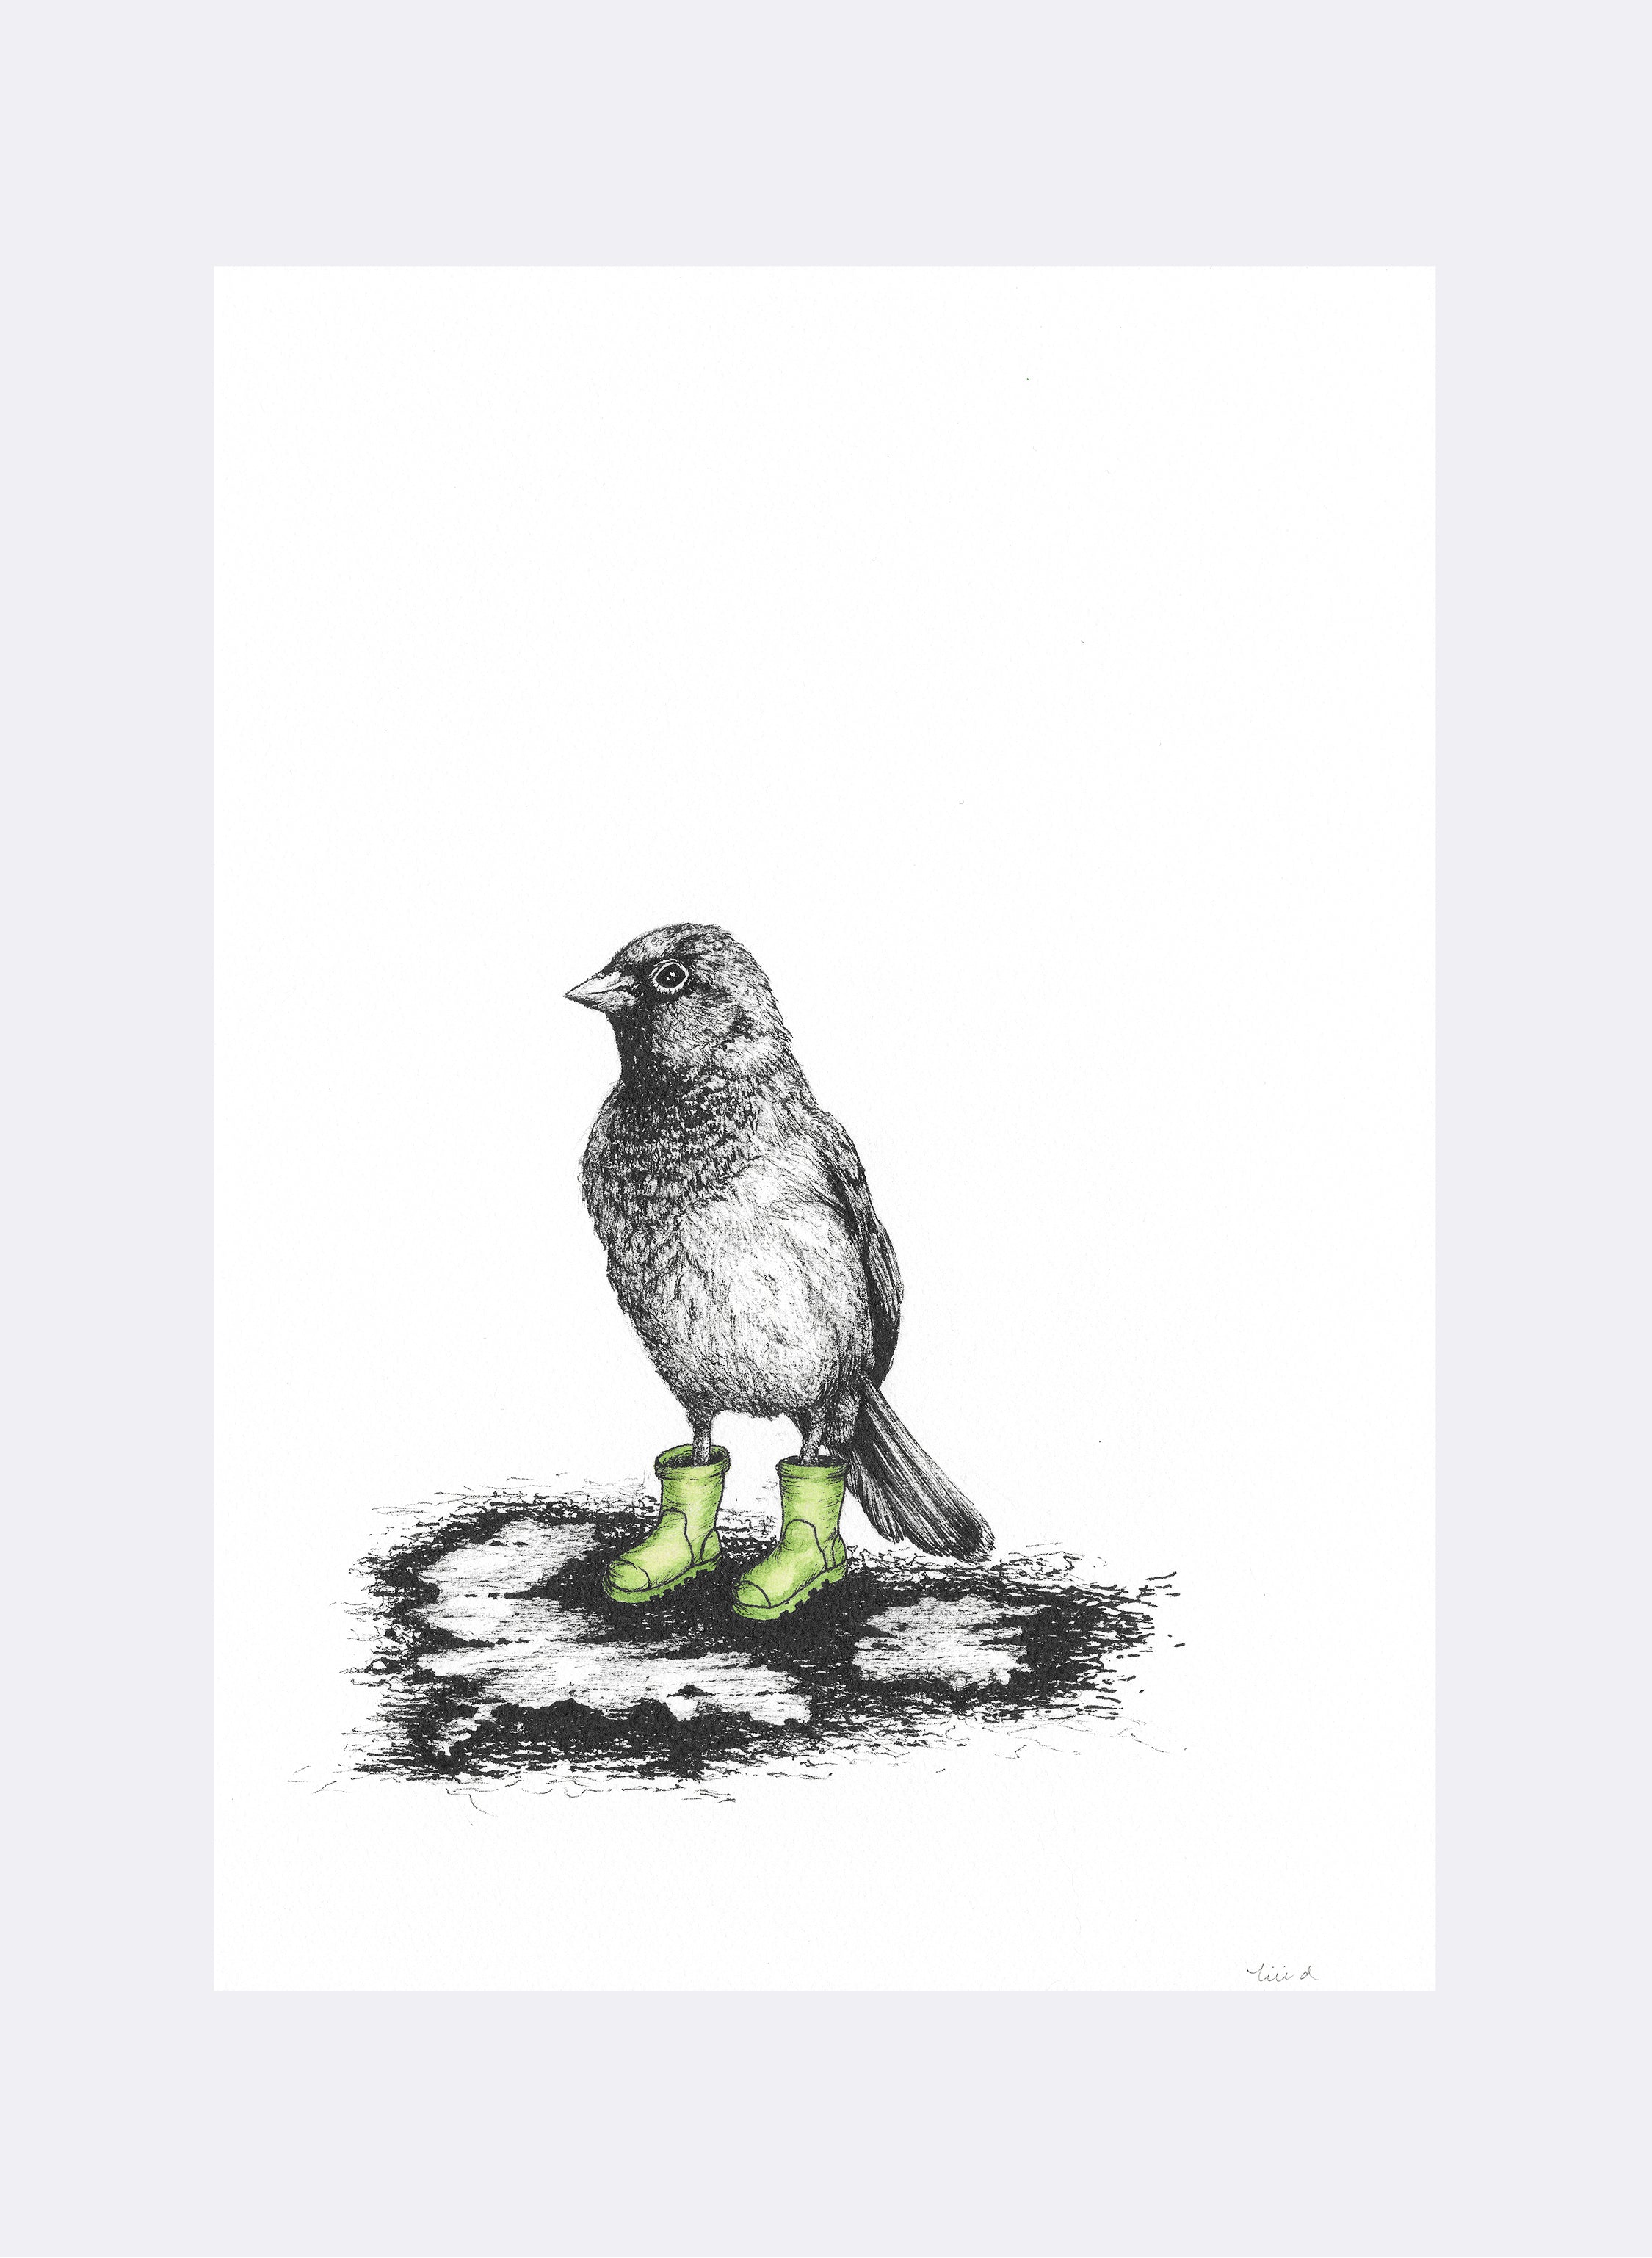 Sparrow In Gumboots - Giclée Print